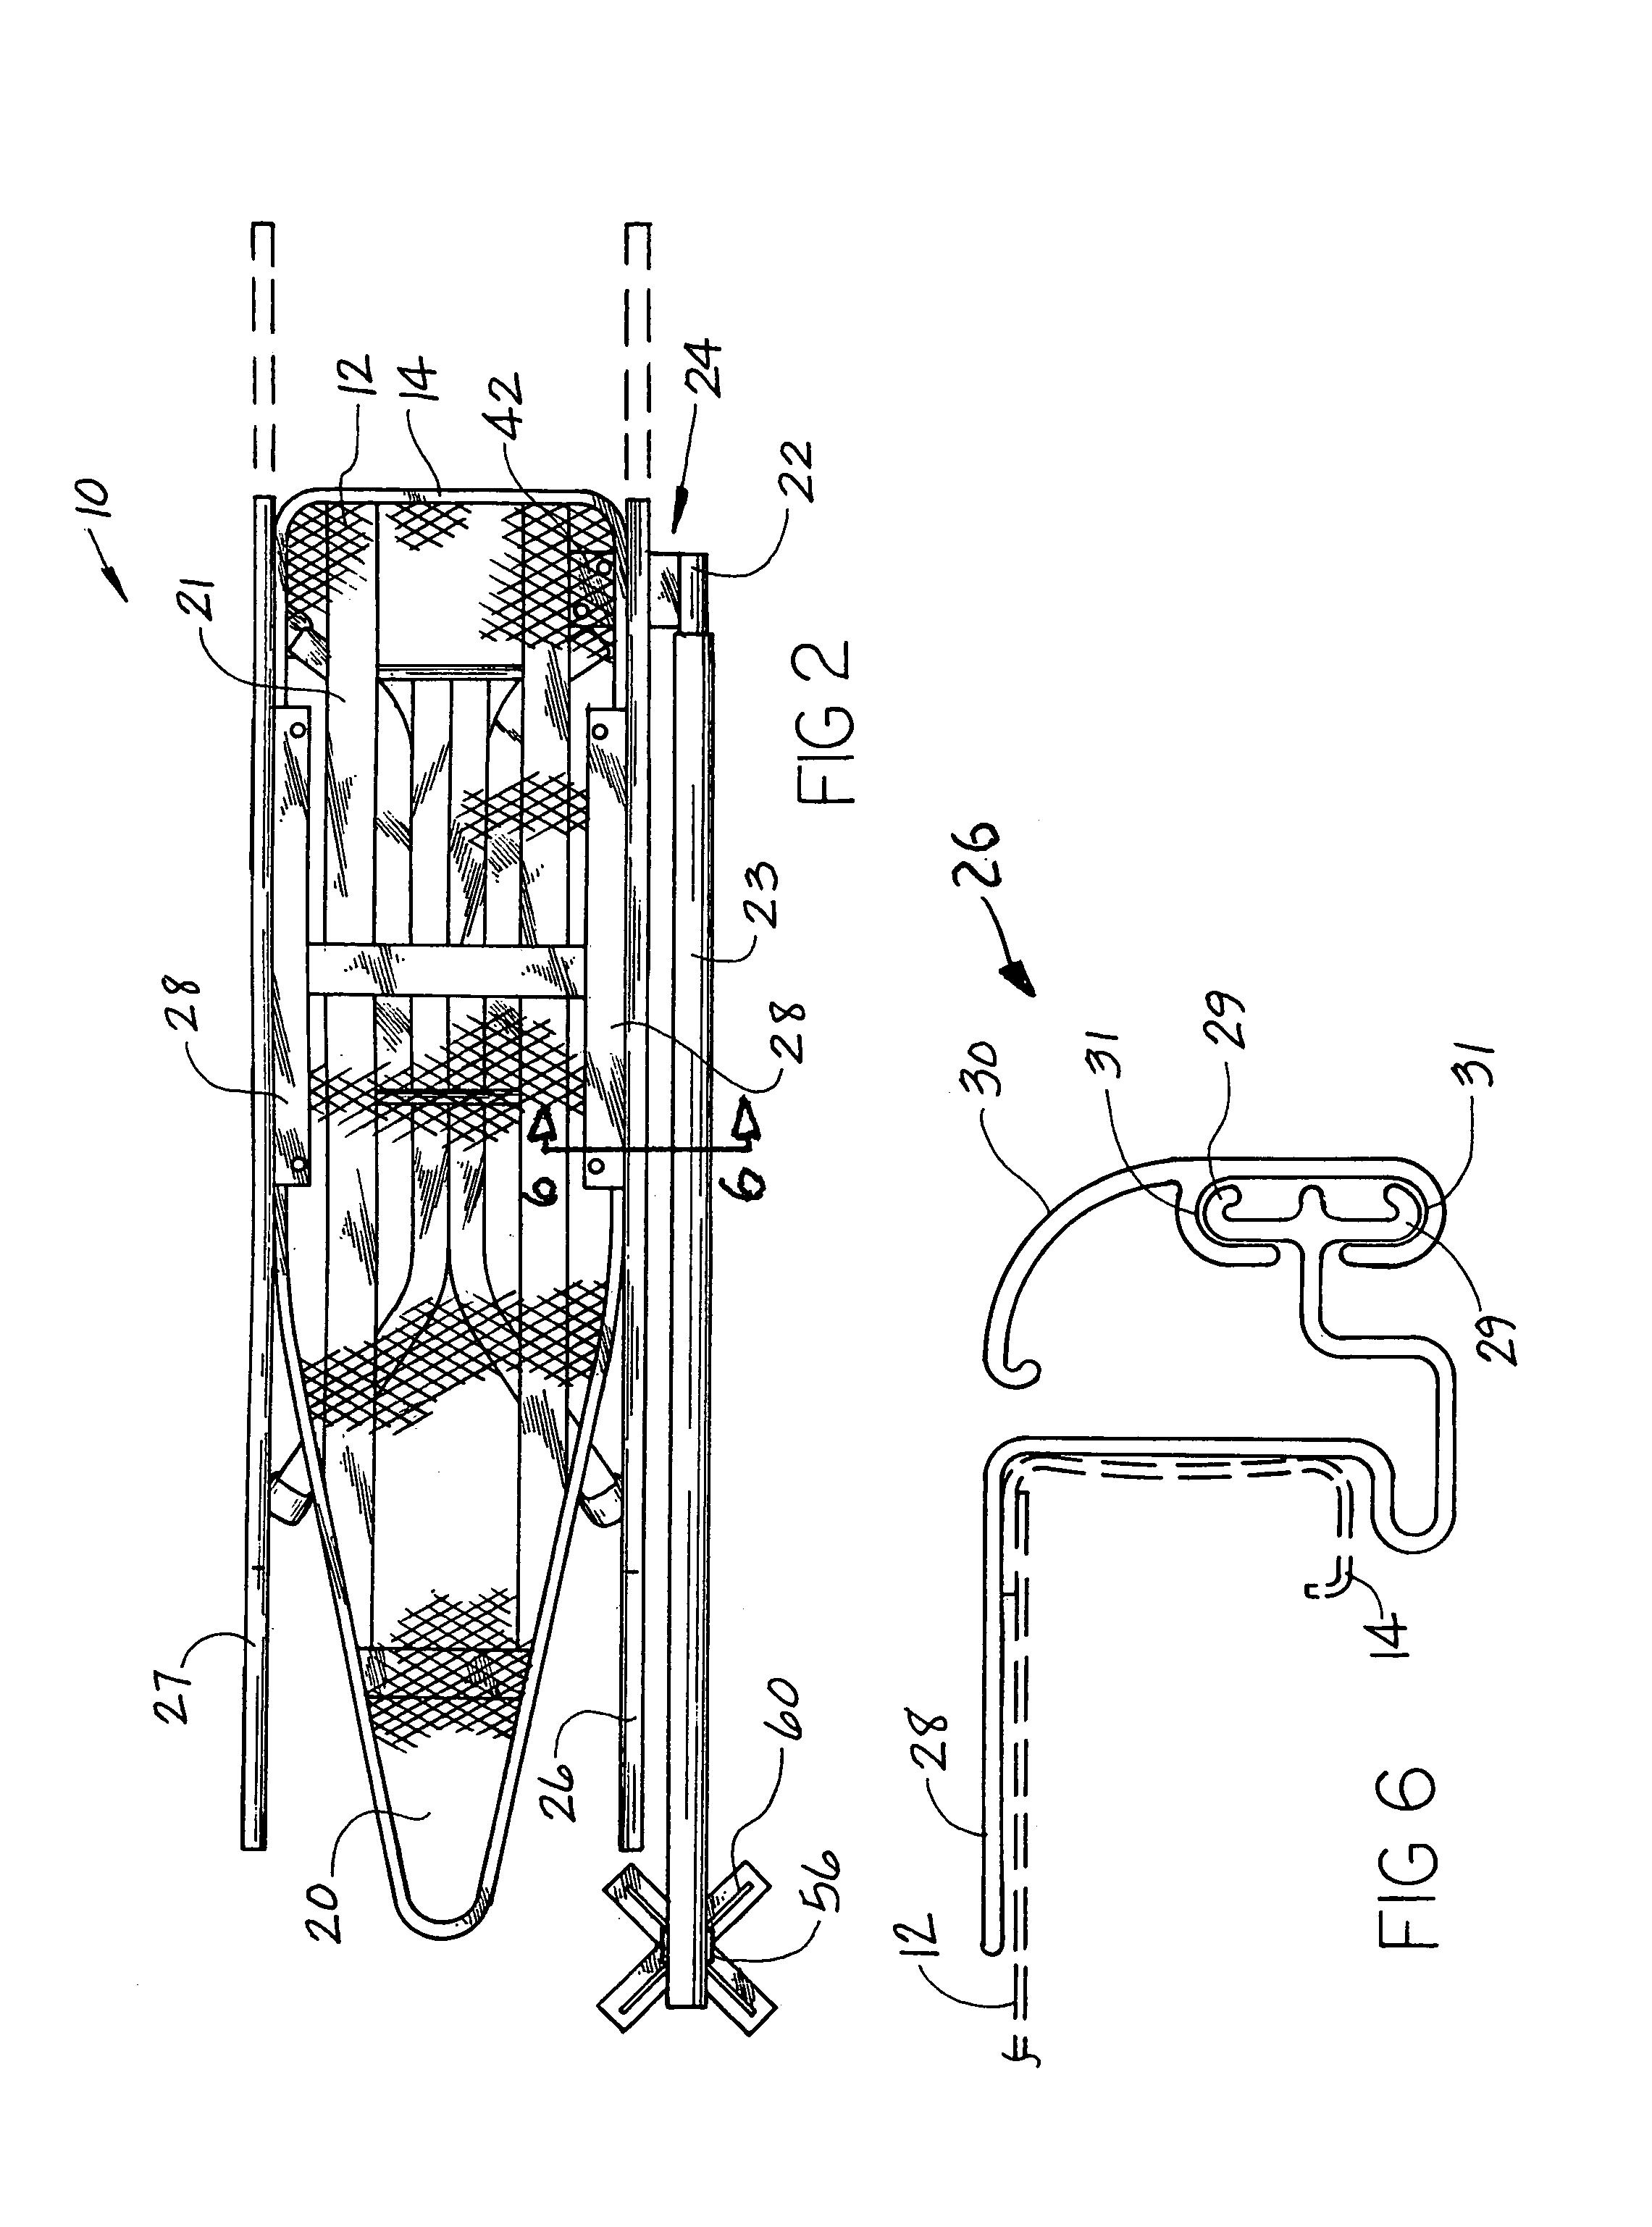 Ironing board attachment apparatus